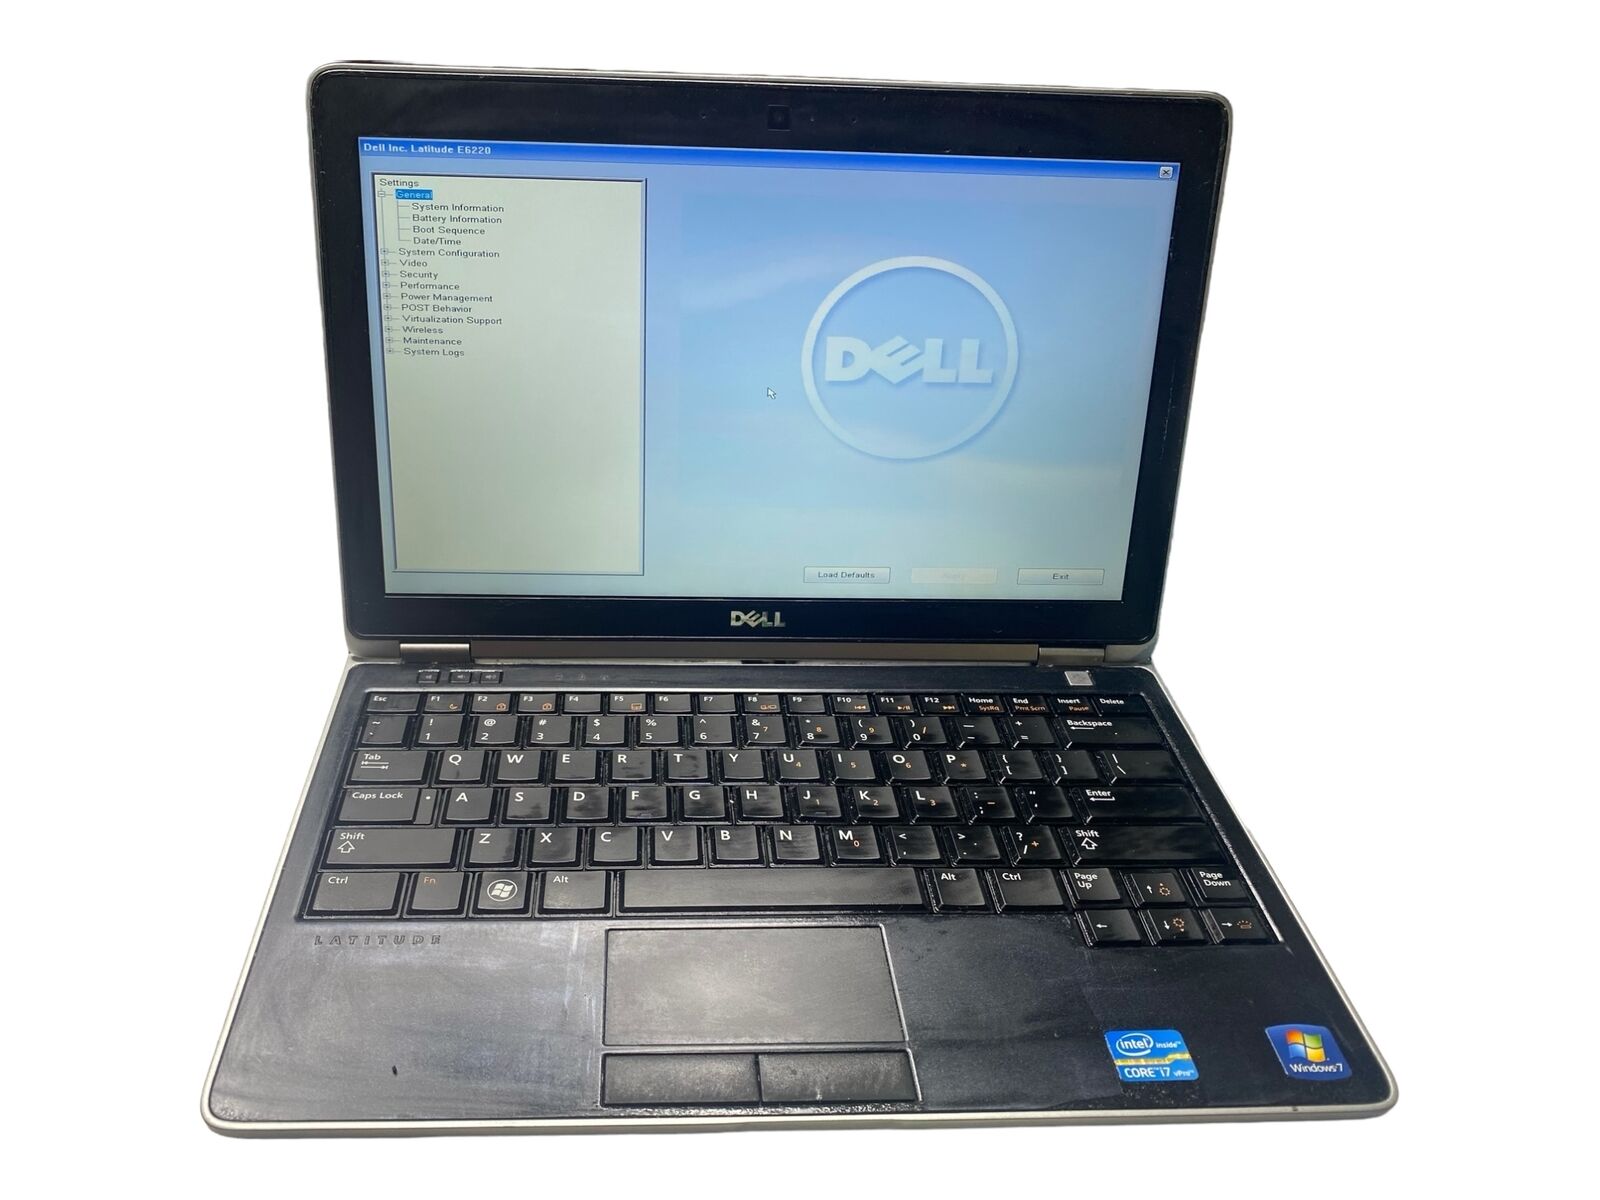 Dell Latitude E6220 i7-2640M 2.8GHz 8GB NO, SSD, OS Laptop PC Notebook